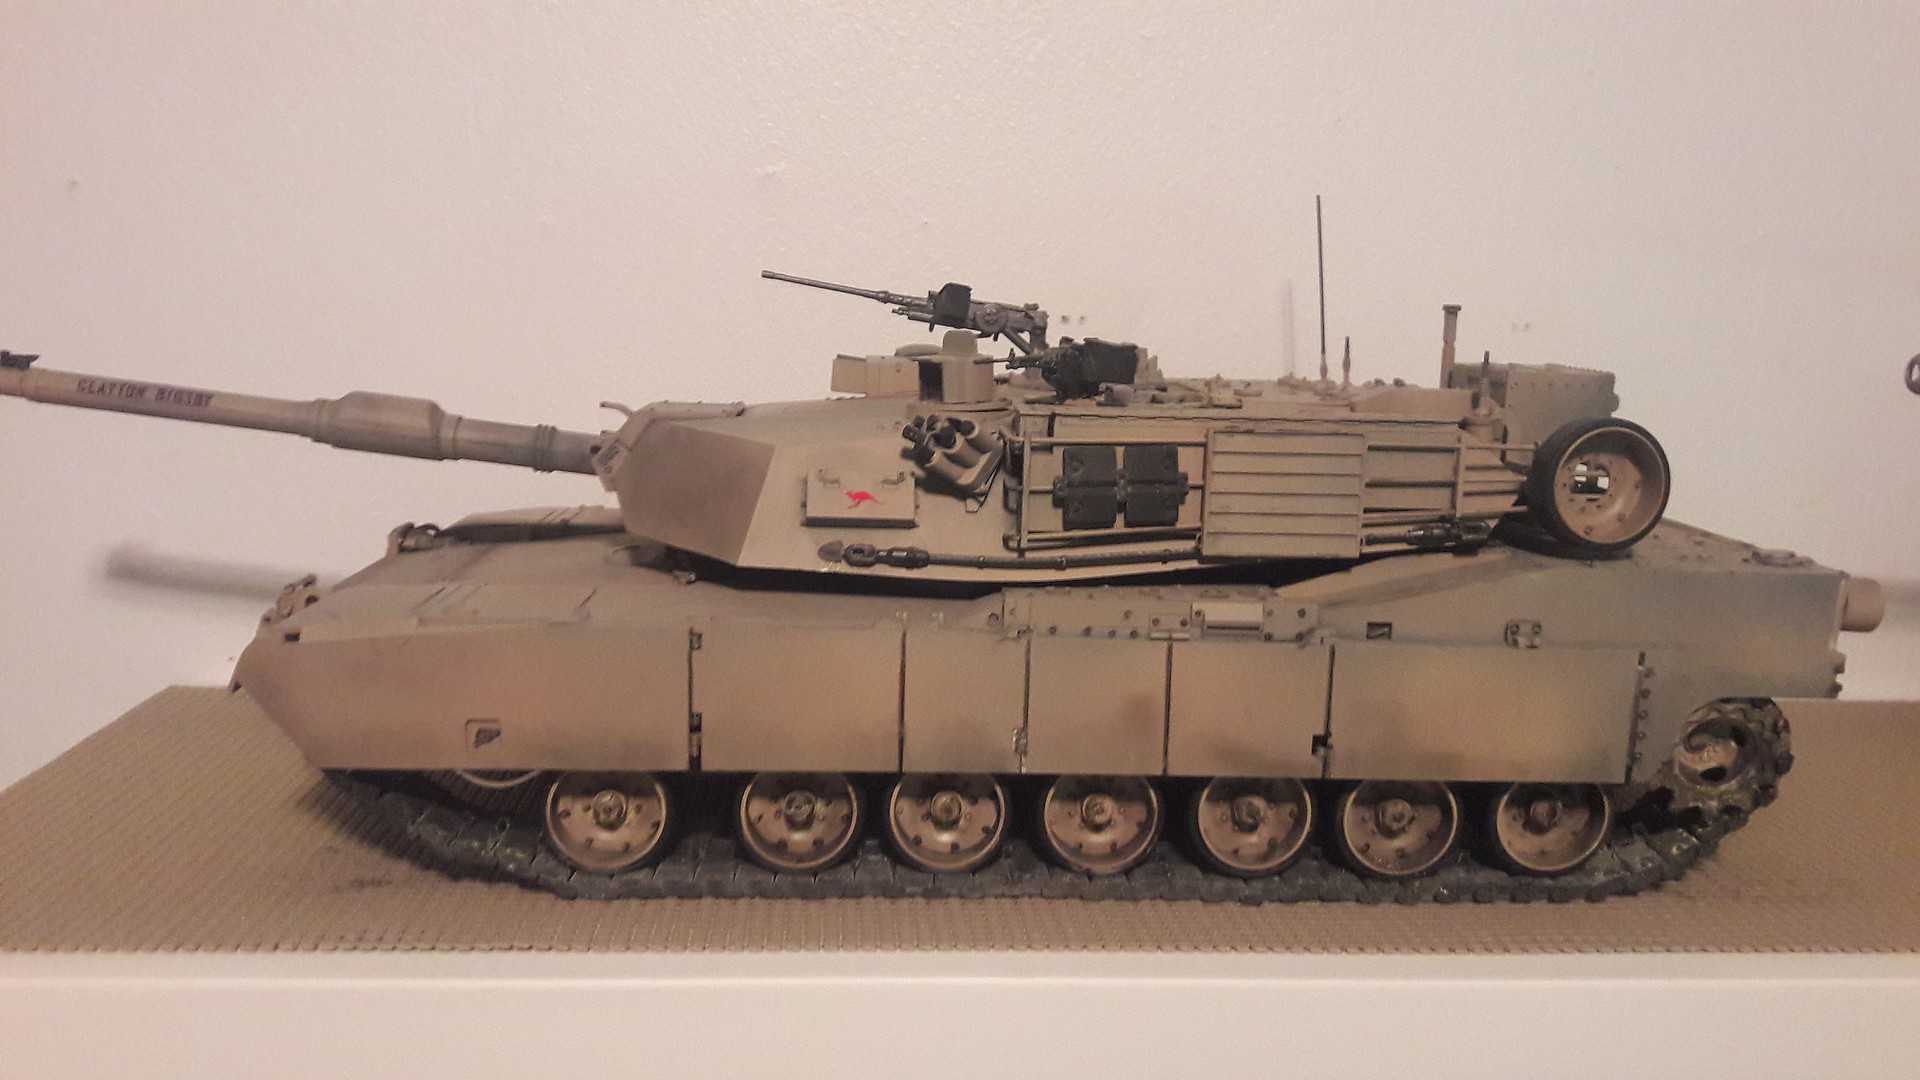 trumpeter models 926 1:16 us m1a1 aim main battle tank